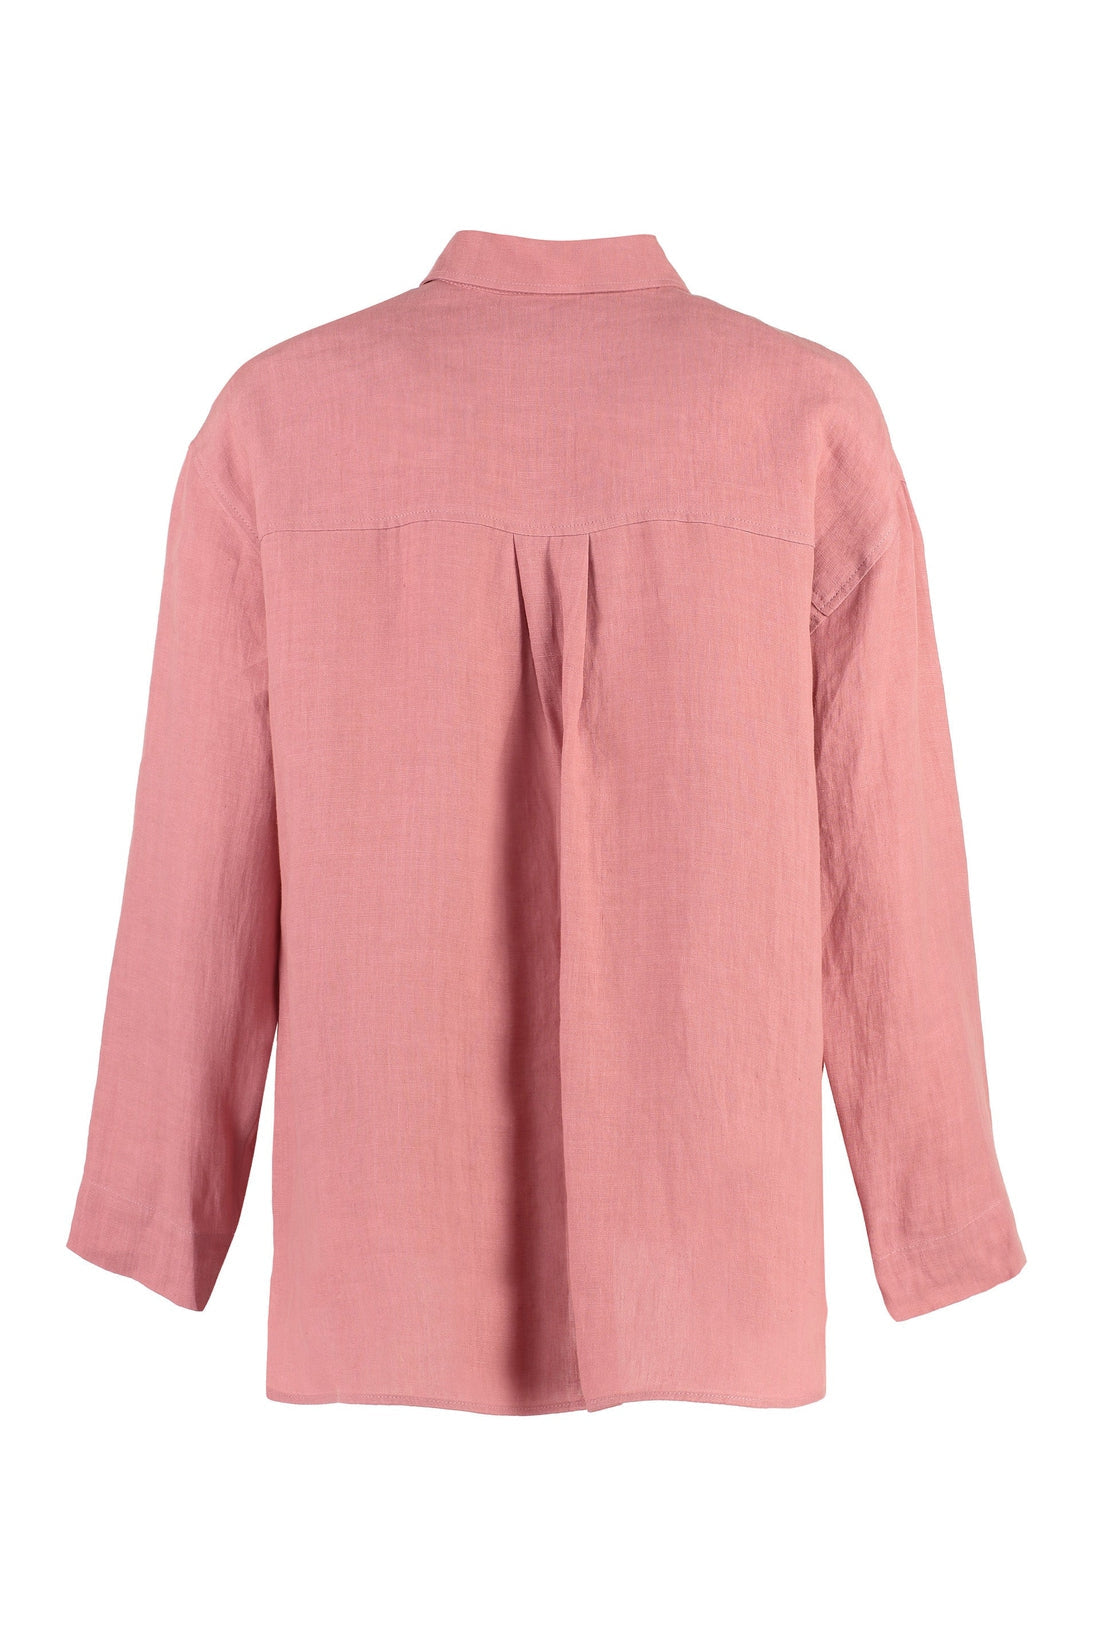 S MAX MARA-OUTLET-SALE-Canard linen shirt-ARCHIVIST